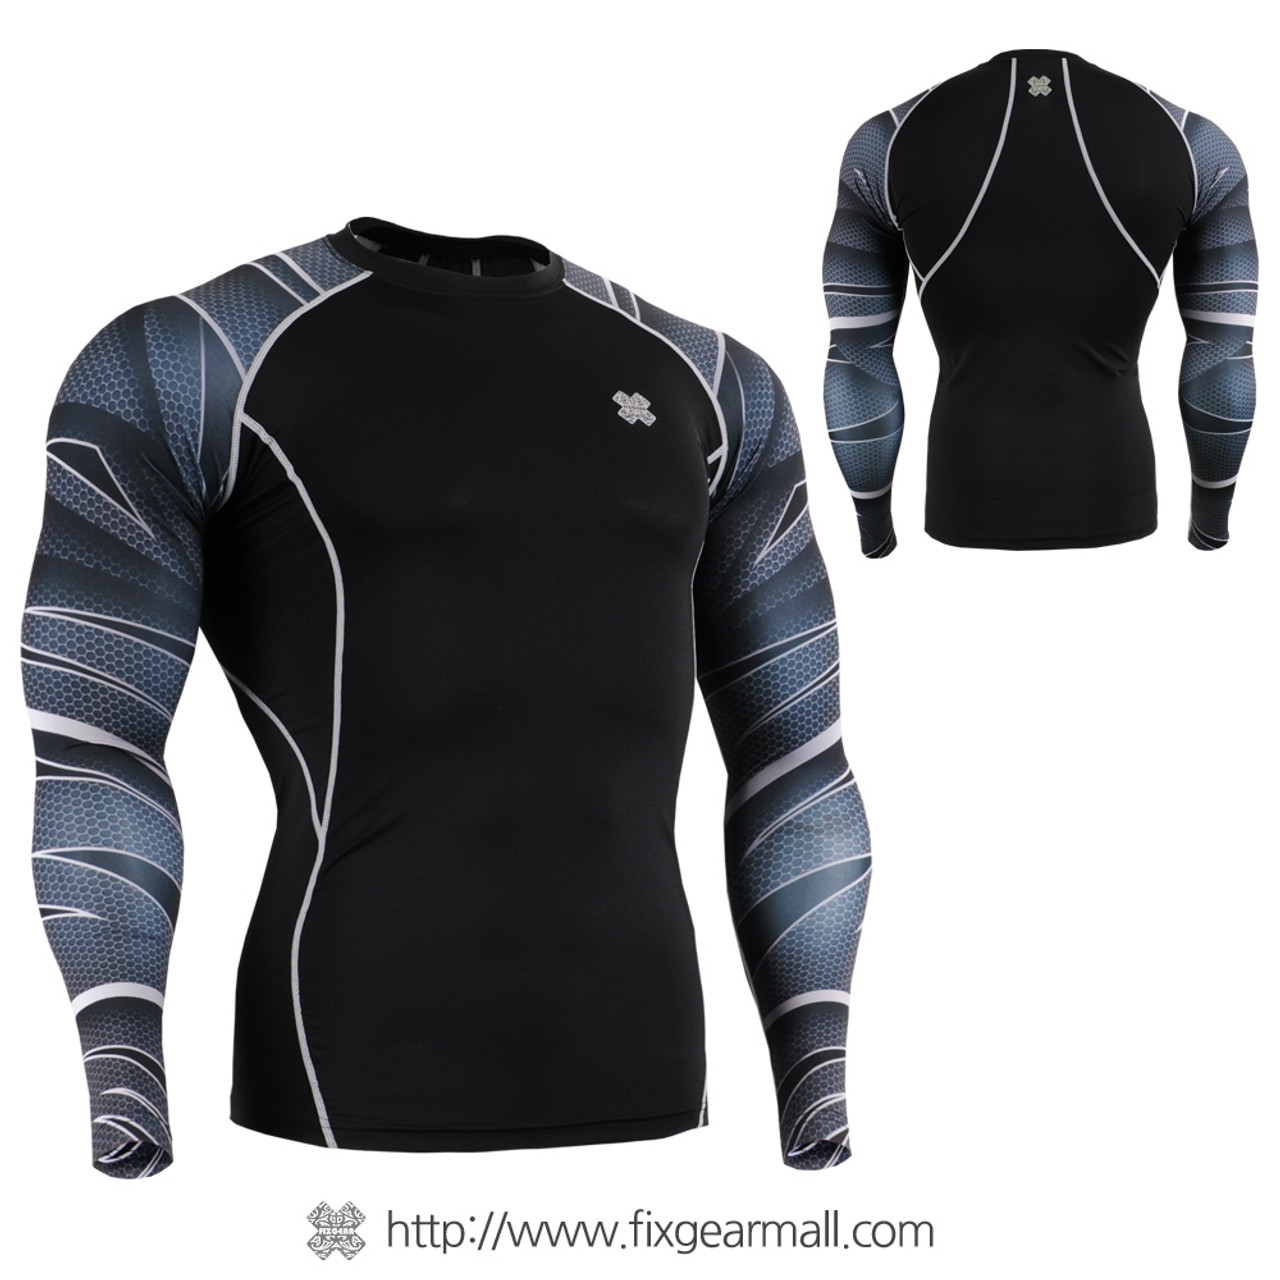 FIXGEAR CPD-B63 Skin Tights Compression Base Layer Shirts